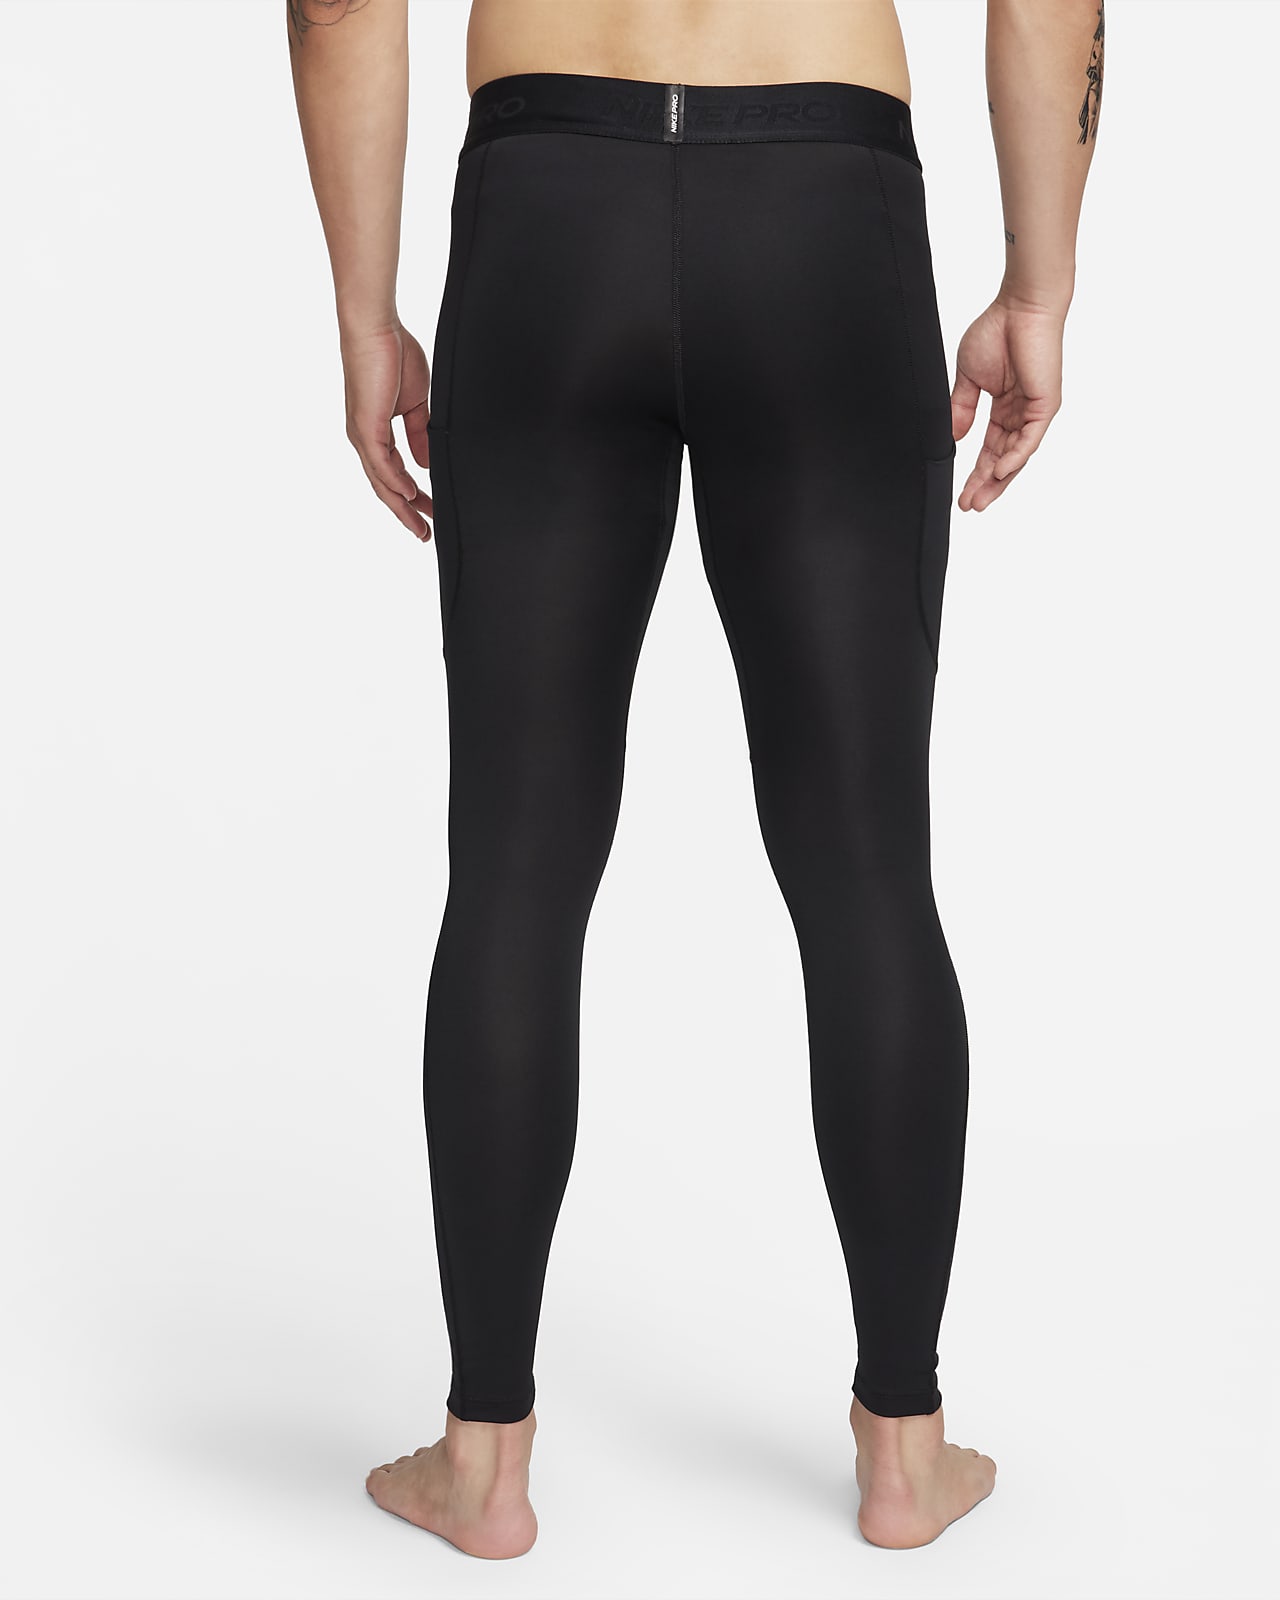 Nike Men Dri-Fit Pro Training Pants Black Running GYM Yoga Tight-Pant  FB7953-010